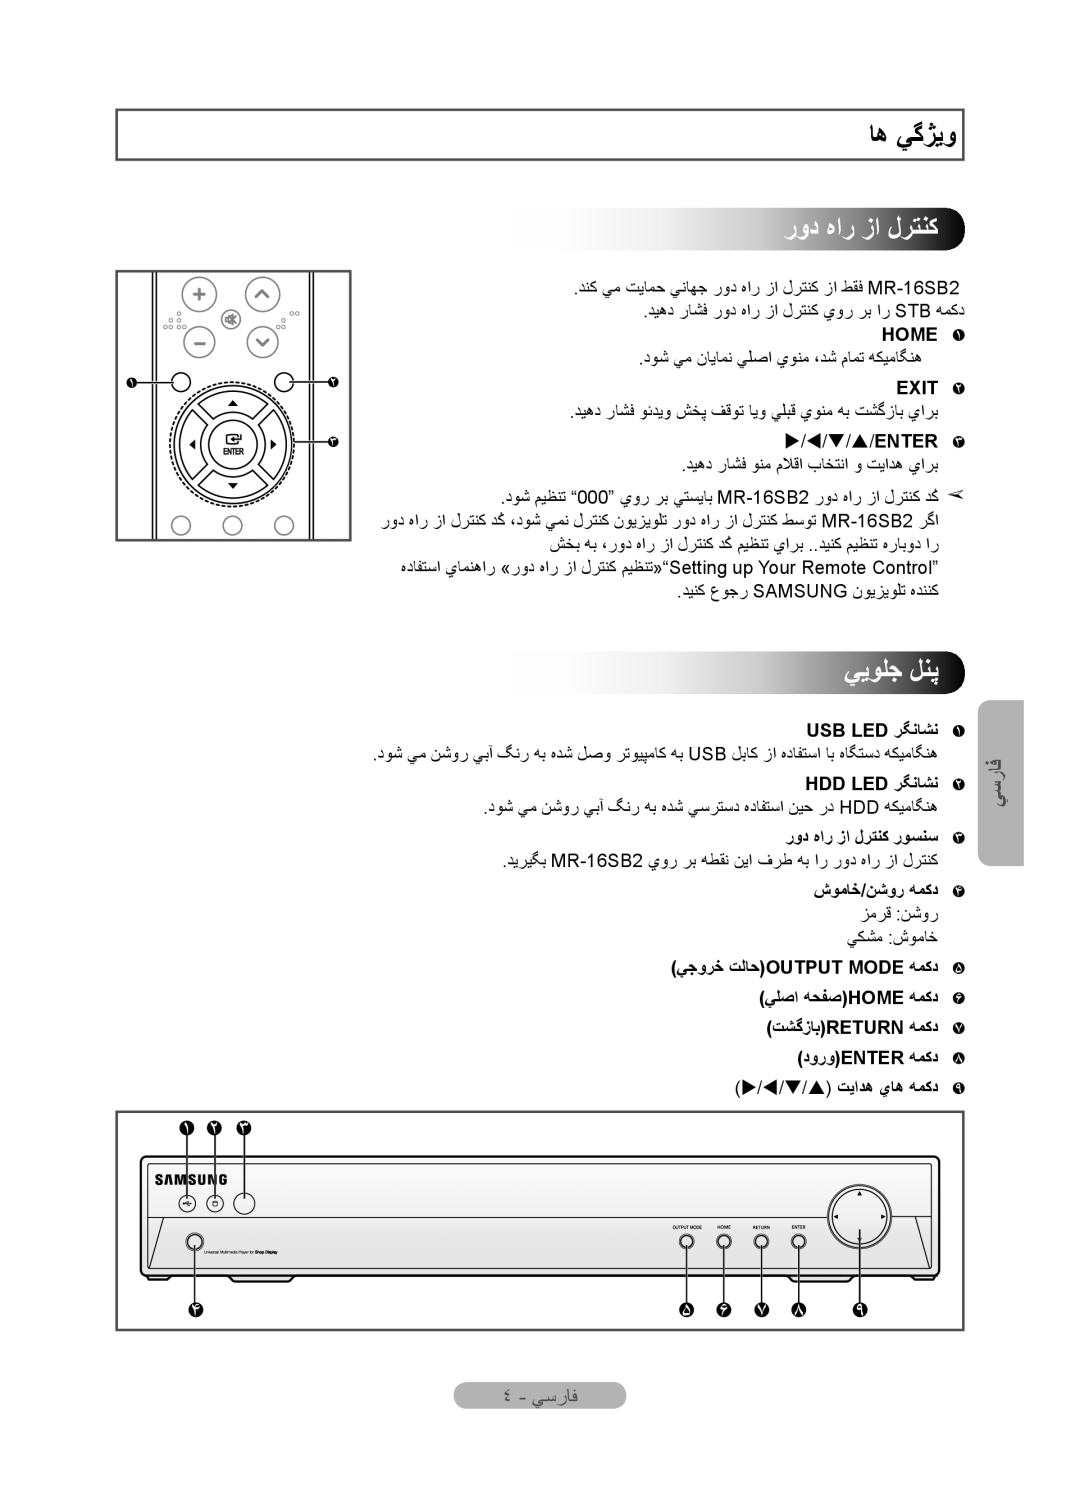 Samsung MR-16SB2 manual ﺎﻫ ﻲﮔﮋﻳﻭ, ﺭﻭﺩ ﻩﺍﺭ ﺯﺍ ﻝﺮﺘﻨﮐ, ﻲﻳﻮﻠﺟ ﻞﻨﭘ, ٤ - ﻲﺳﺭﺎﻓ, Home, Exit, ////Enter, Usb Led ﺮﮕﻧﺎﺸﻧ 